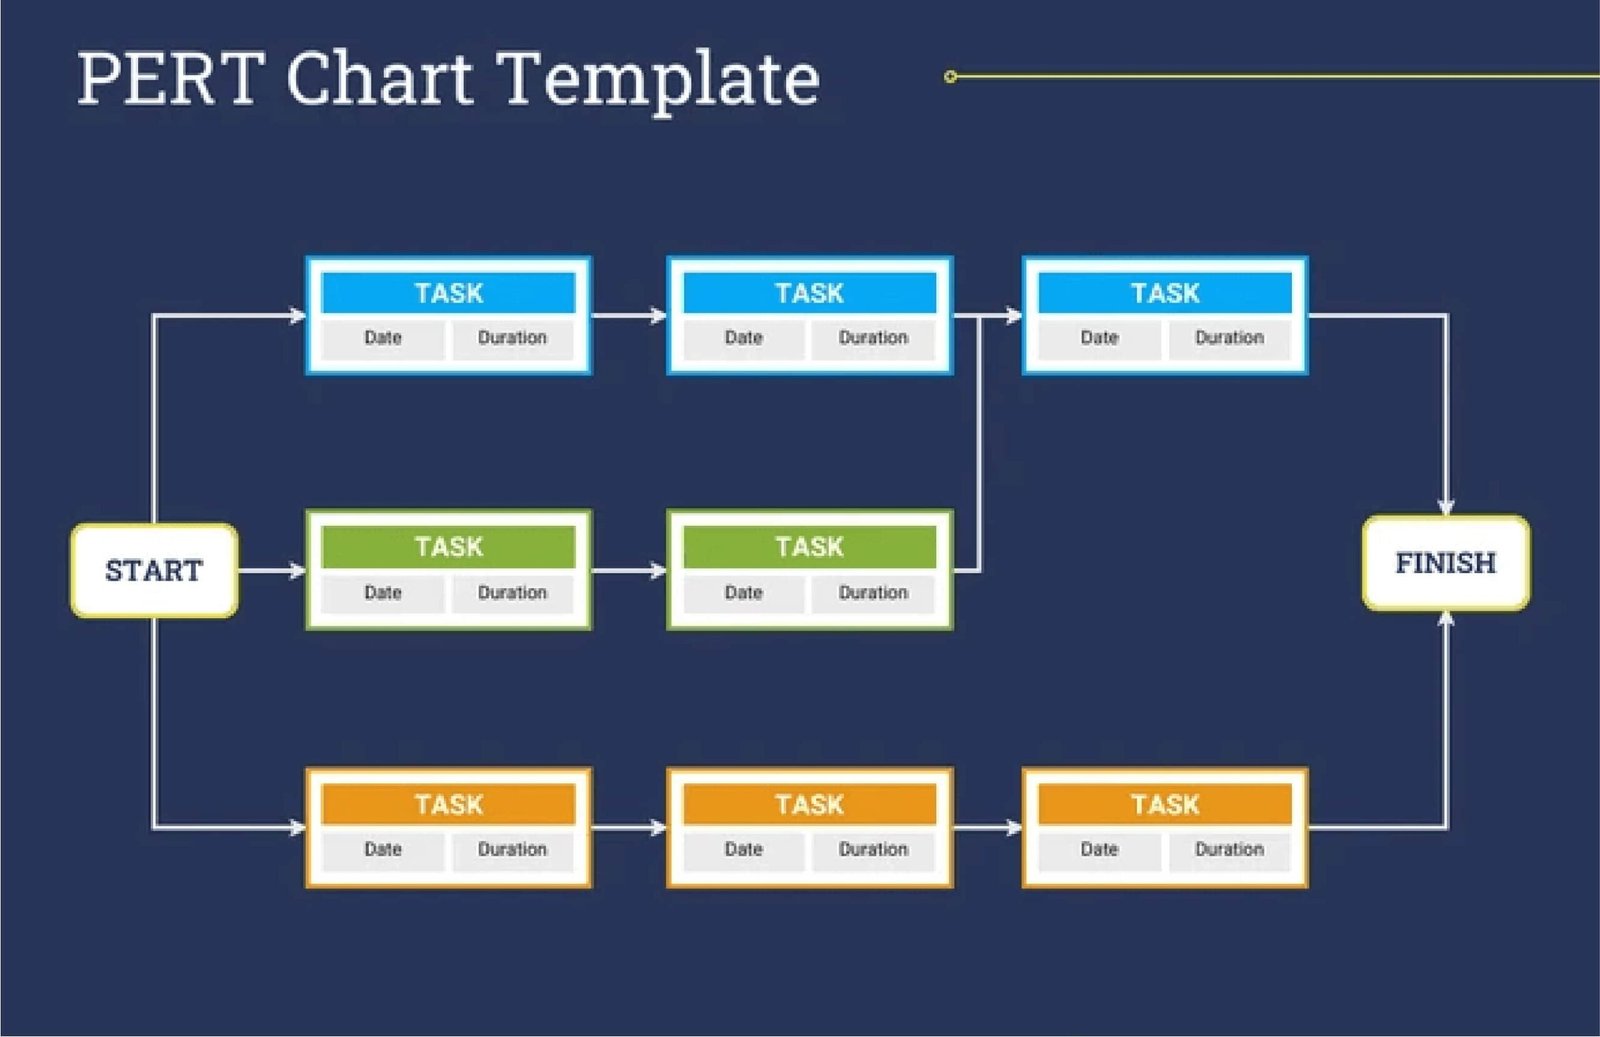 pert chart analysis template